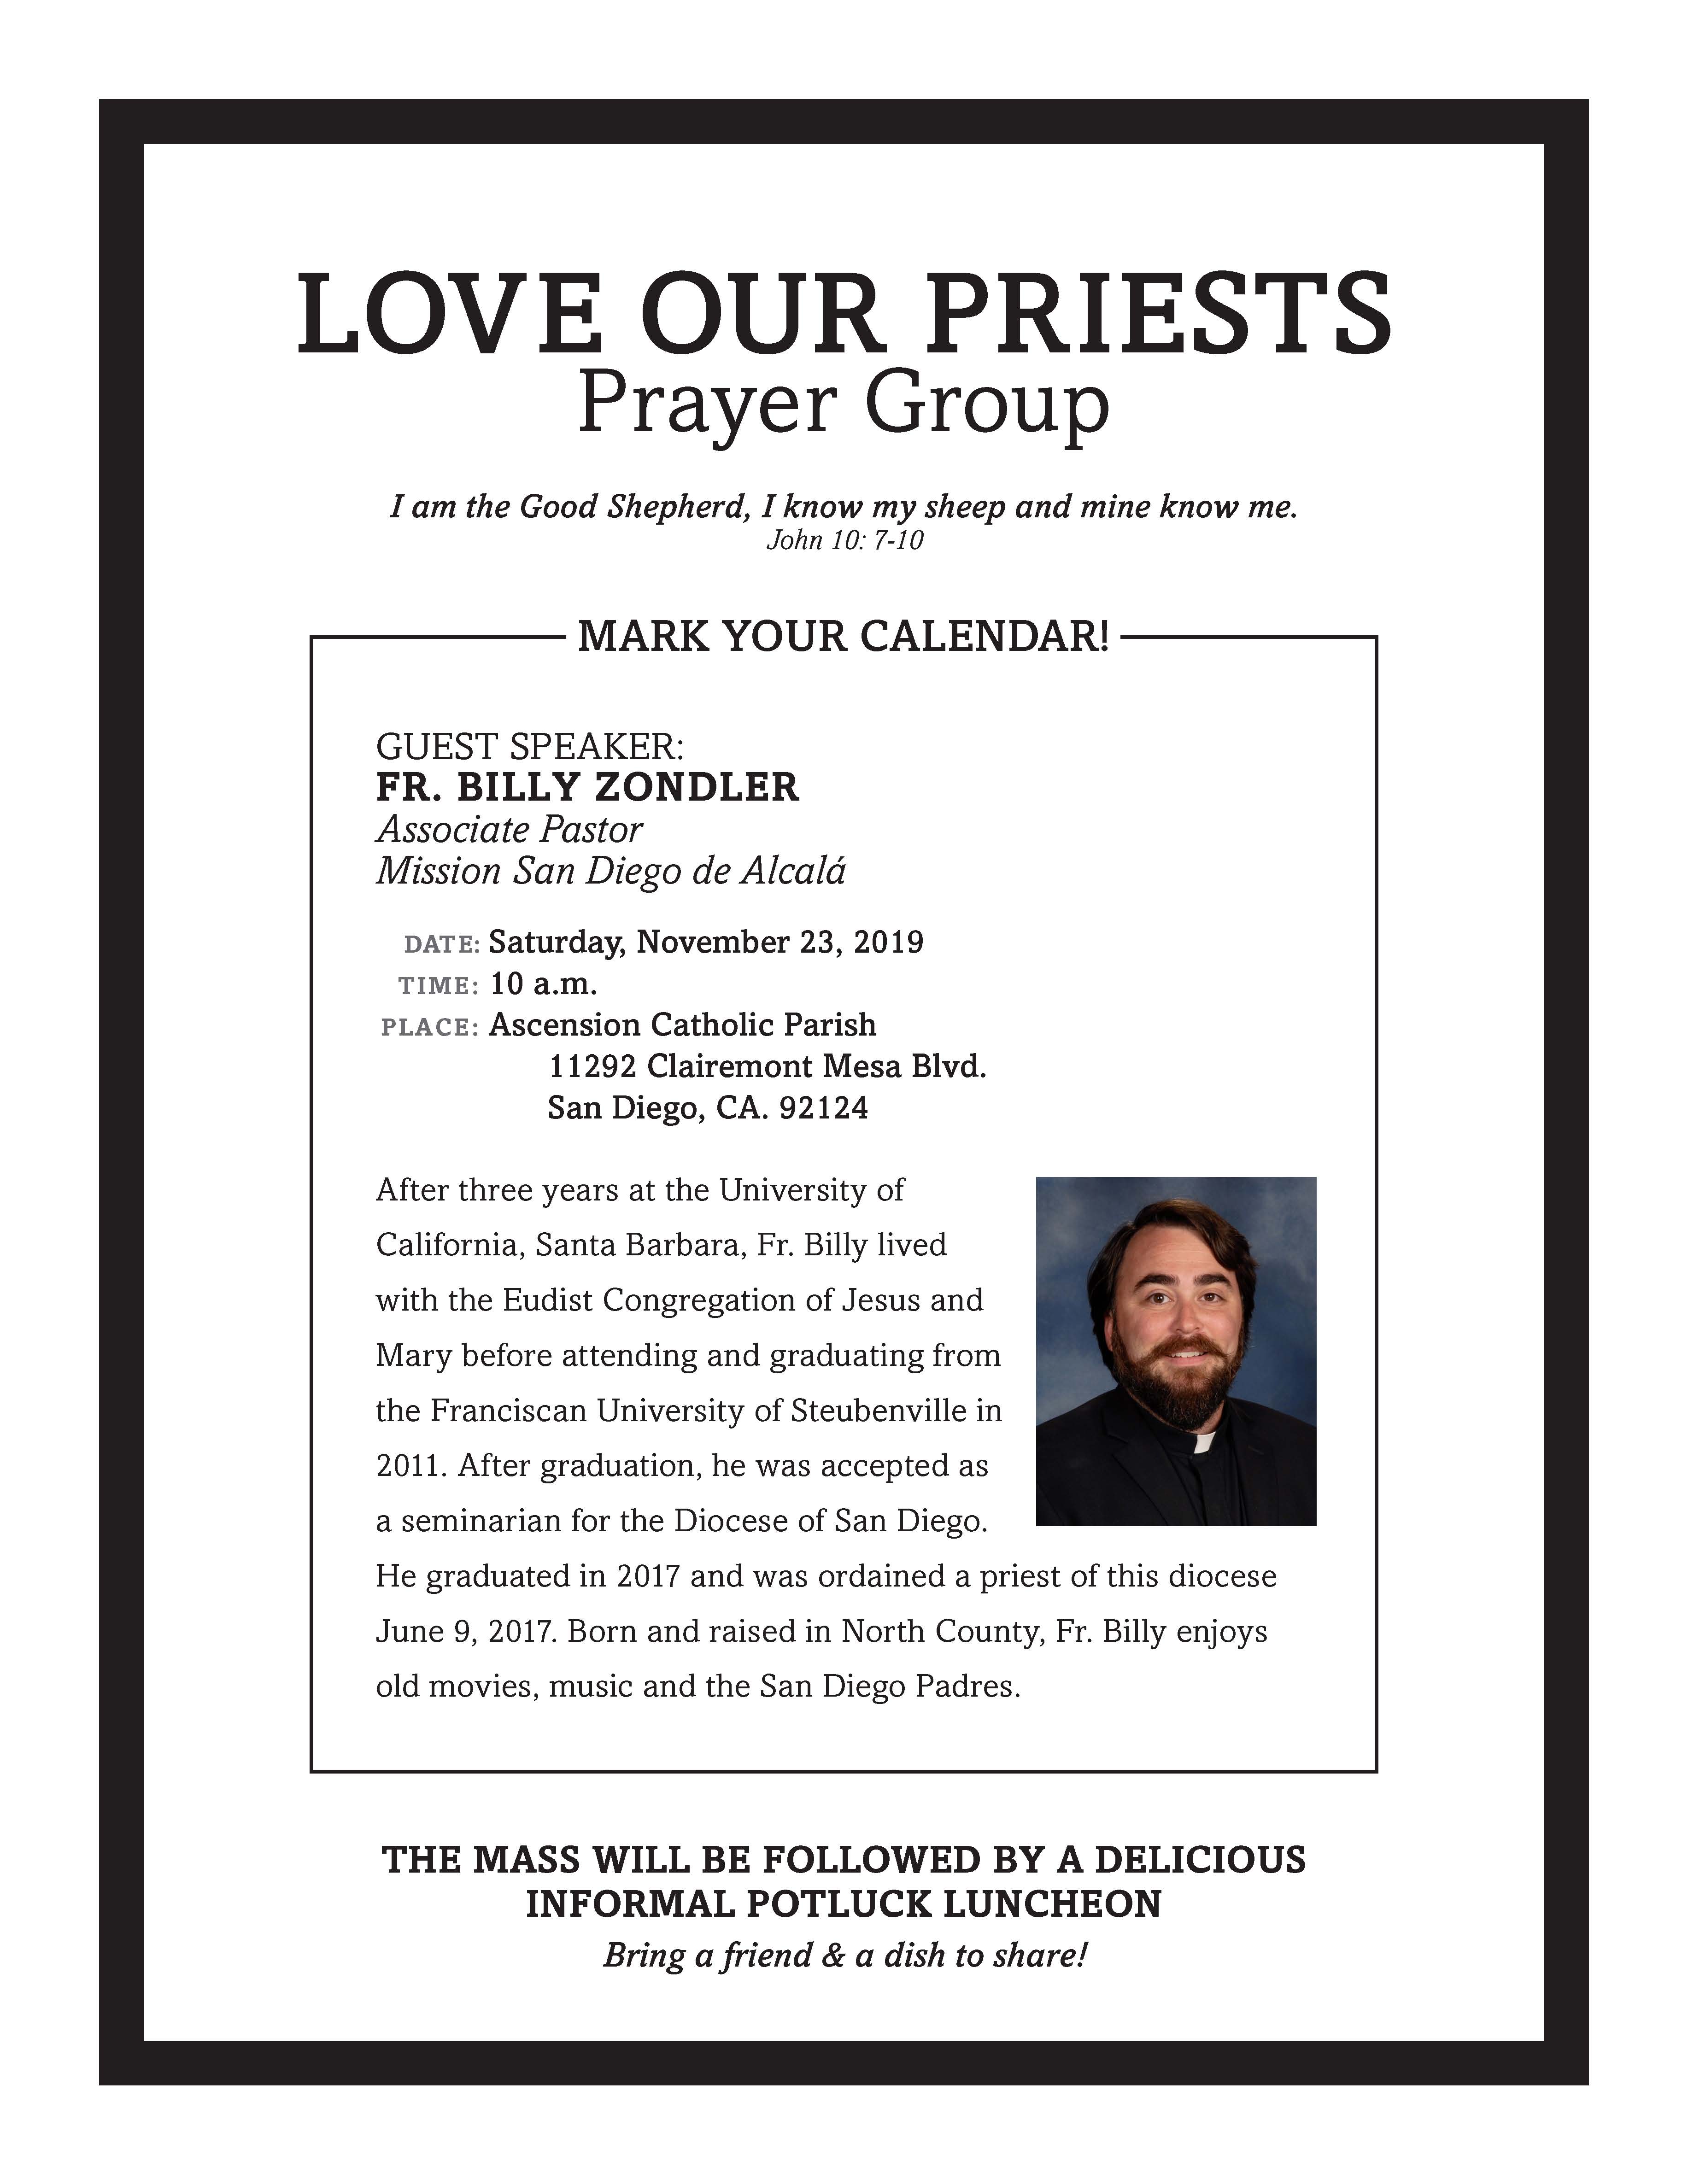 Love Our Priests event at Ascension Catholic Parish